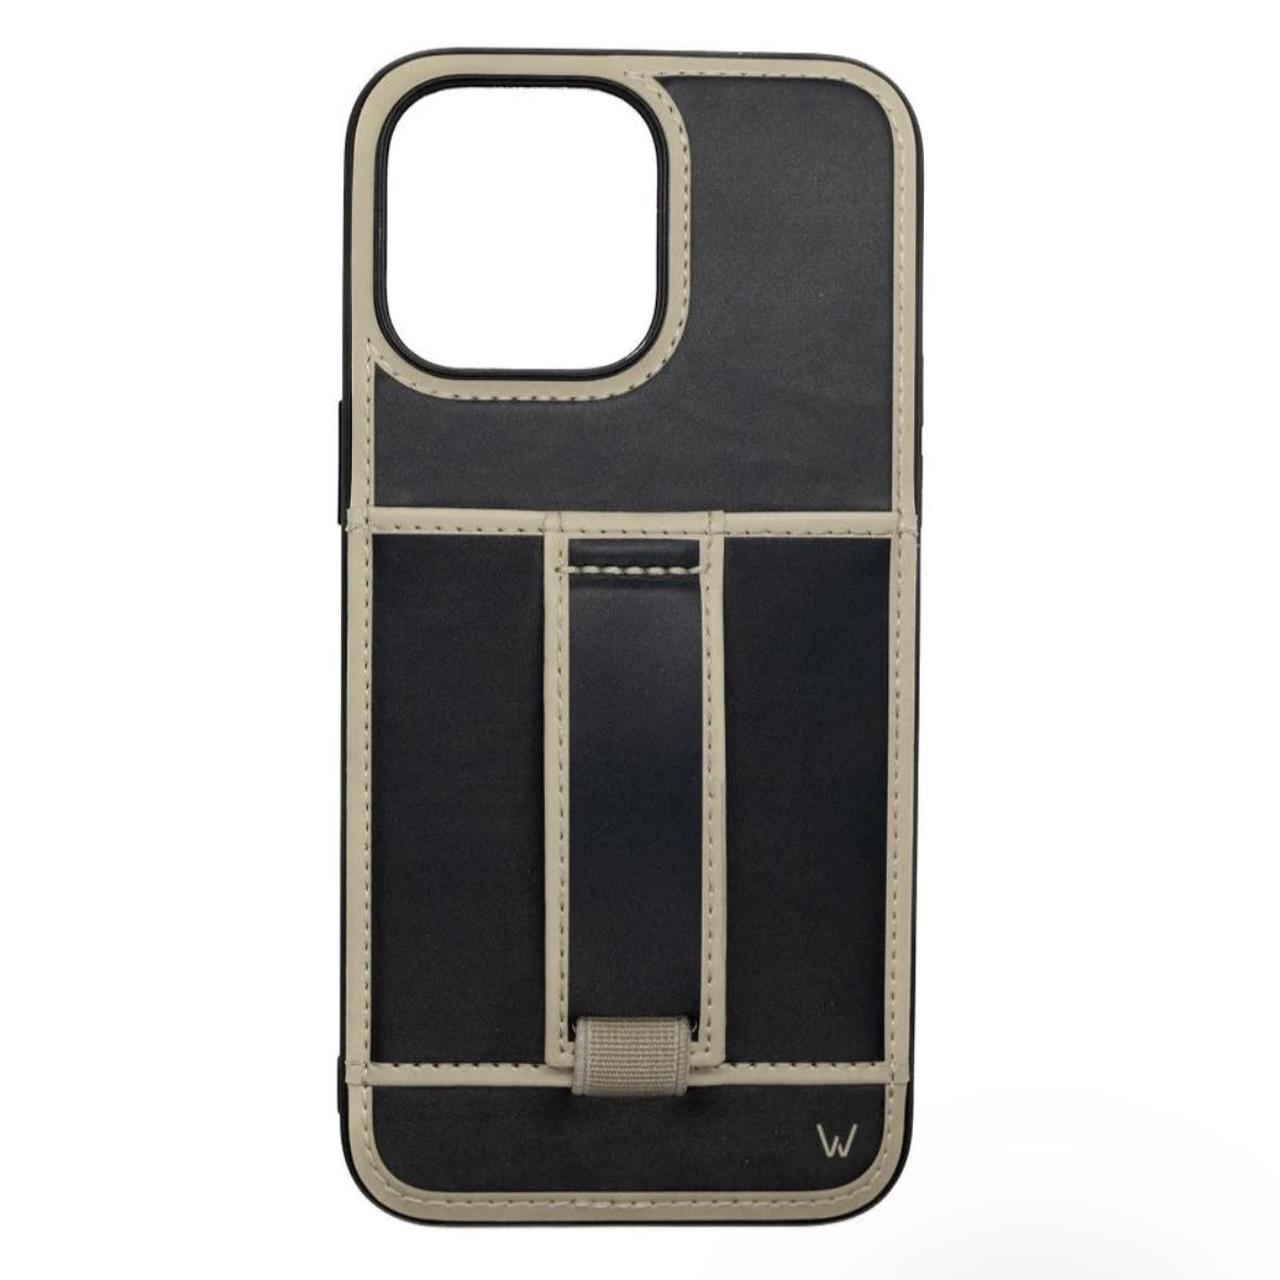 iPhone 13 Pro Max Louis Vuitton Cases, $50 each, two - Depop